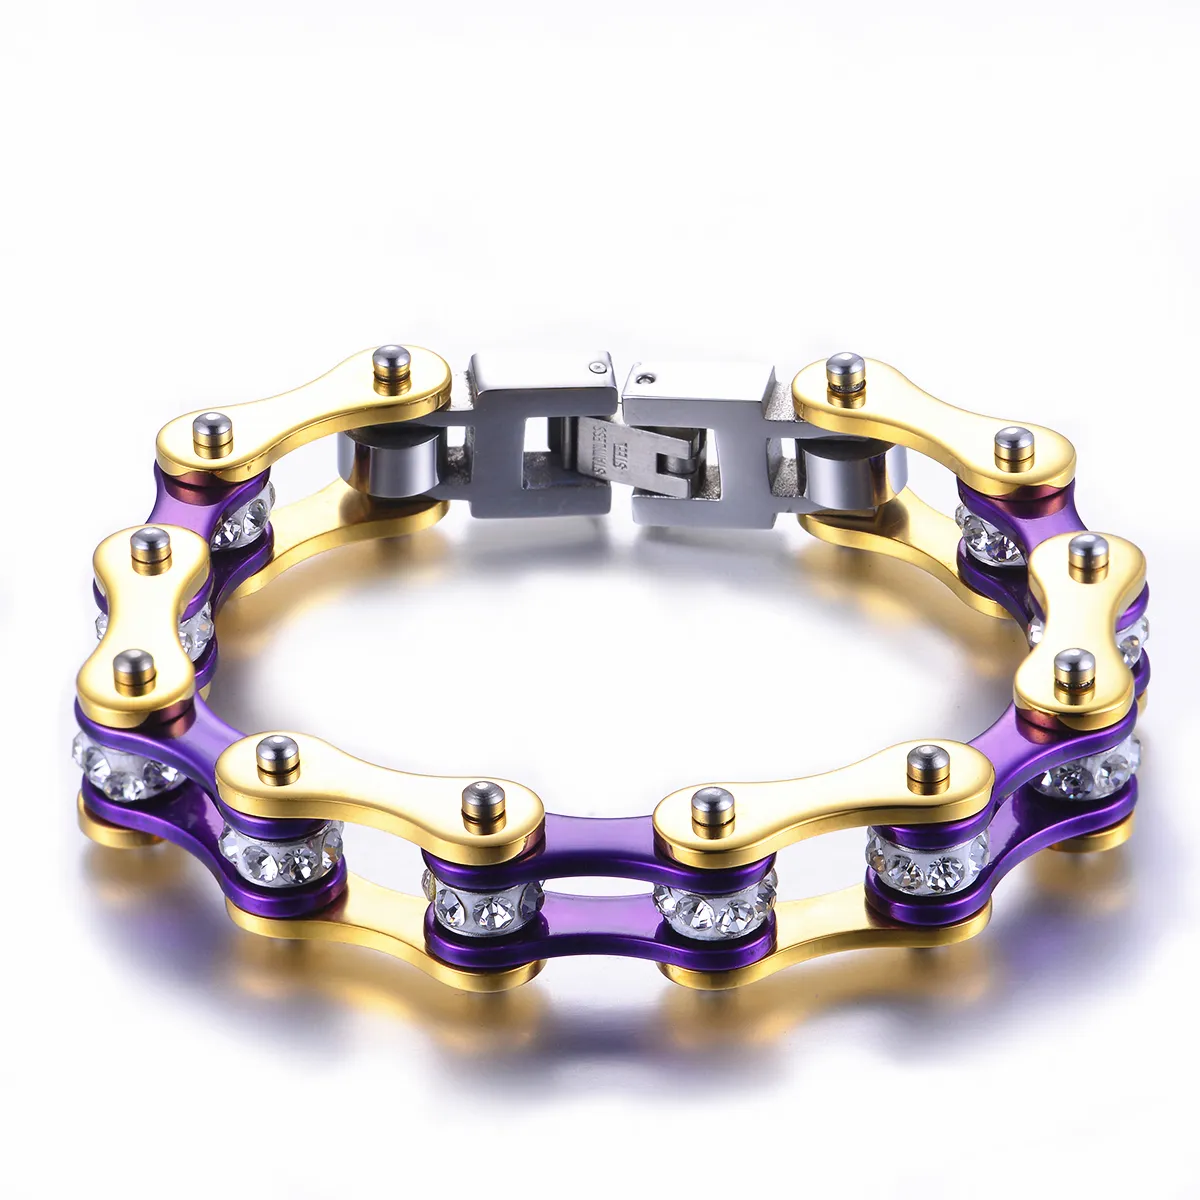 Motorcycle Chain Ladies Bling Bracelet Gold & Purple Color Link Chain 316 Stainless Steel Bicycle Biker Bracelet